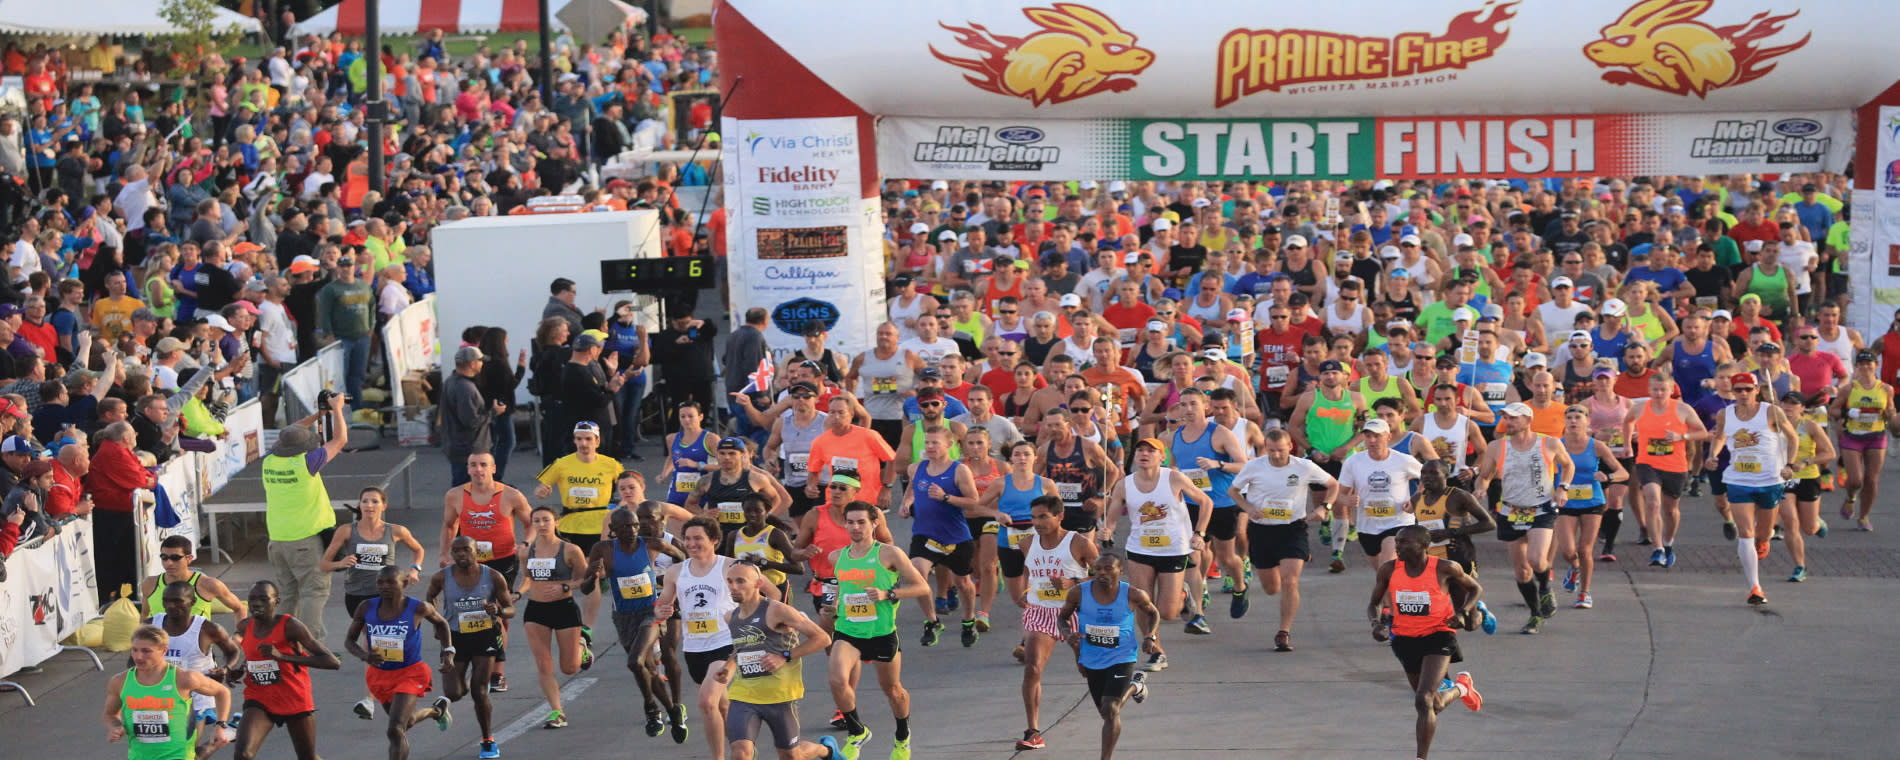 Prairie Fire Marathon 2015_Starting Line_Greater Wichita Sports Commission